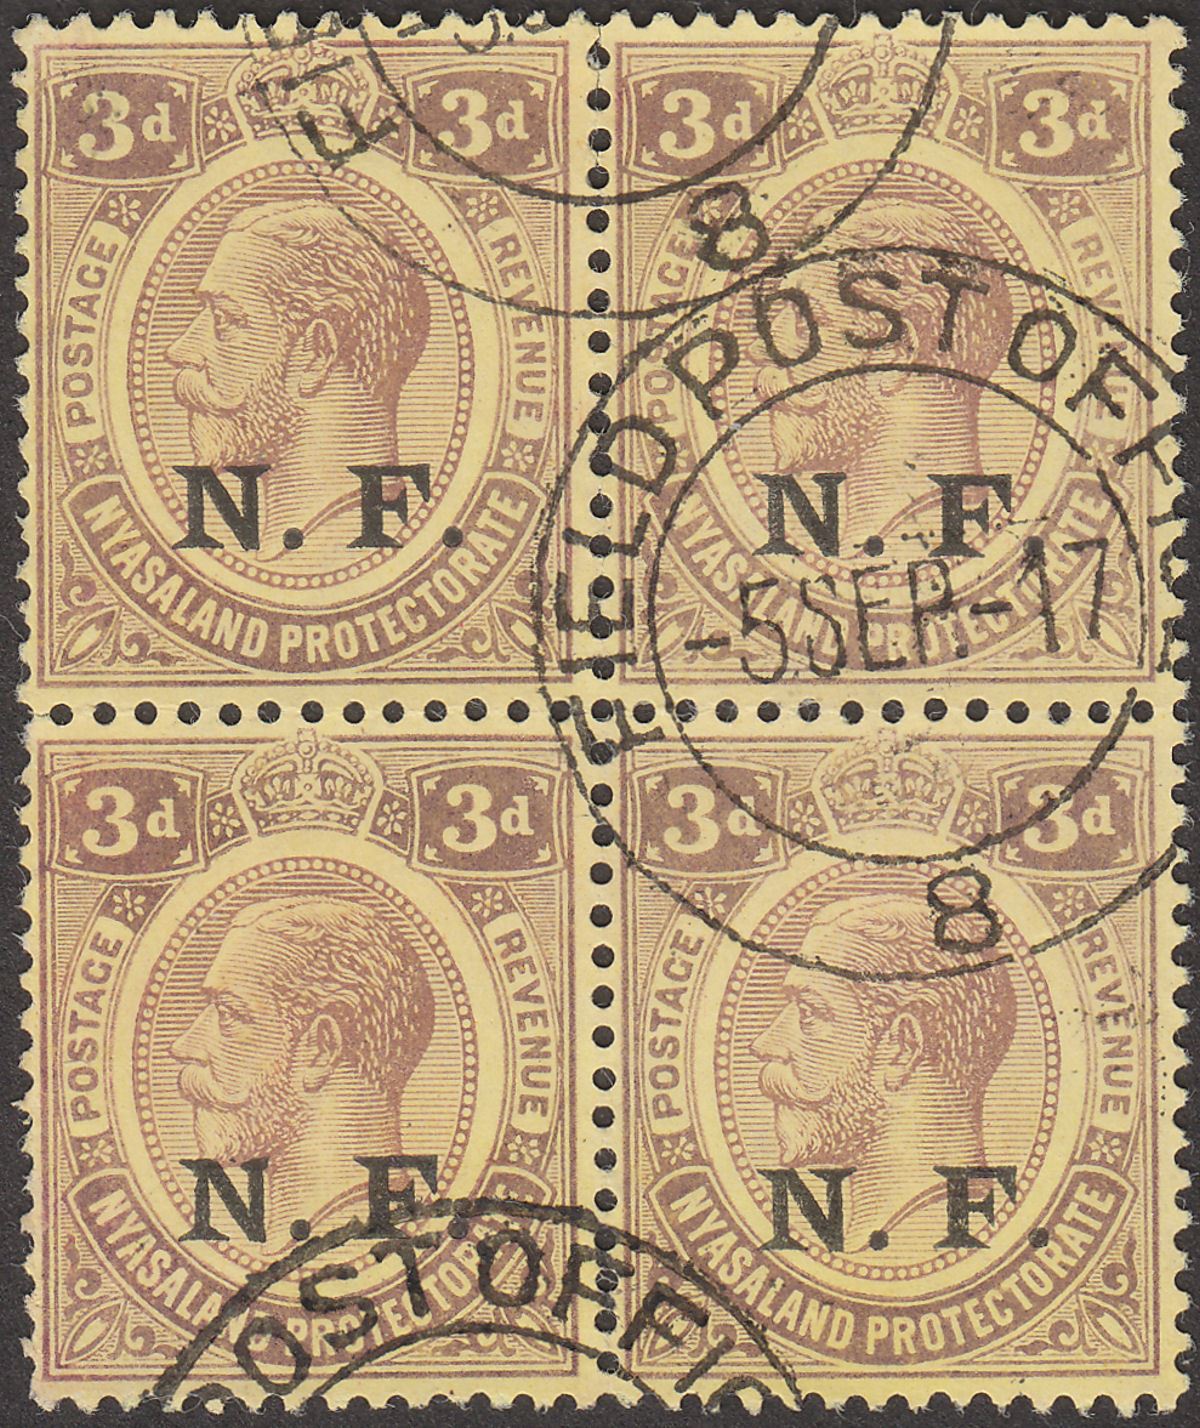 Tanganyika 1917 KGV NF Opt 3d Block of 4 Used FIELD POST OFFICE 8 Postmark c£80